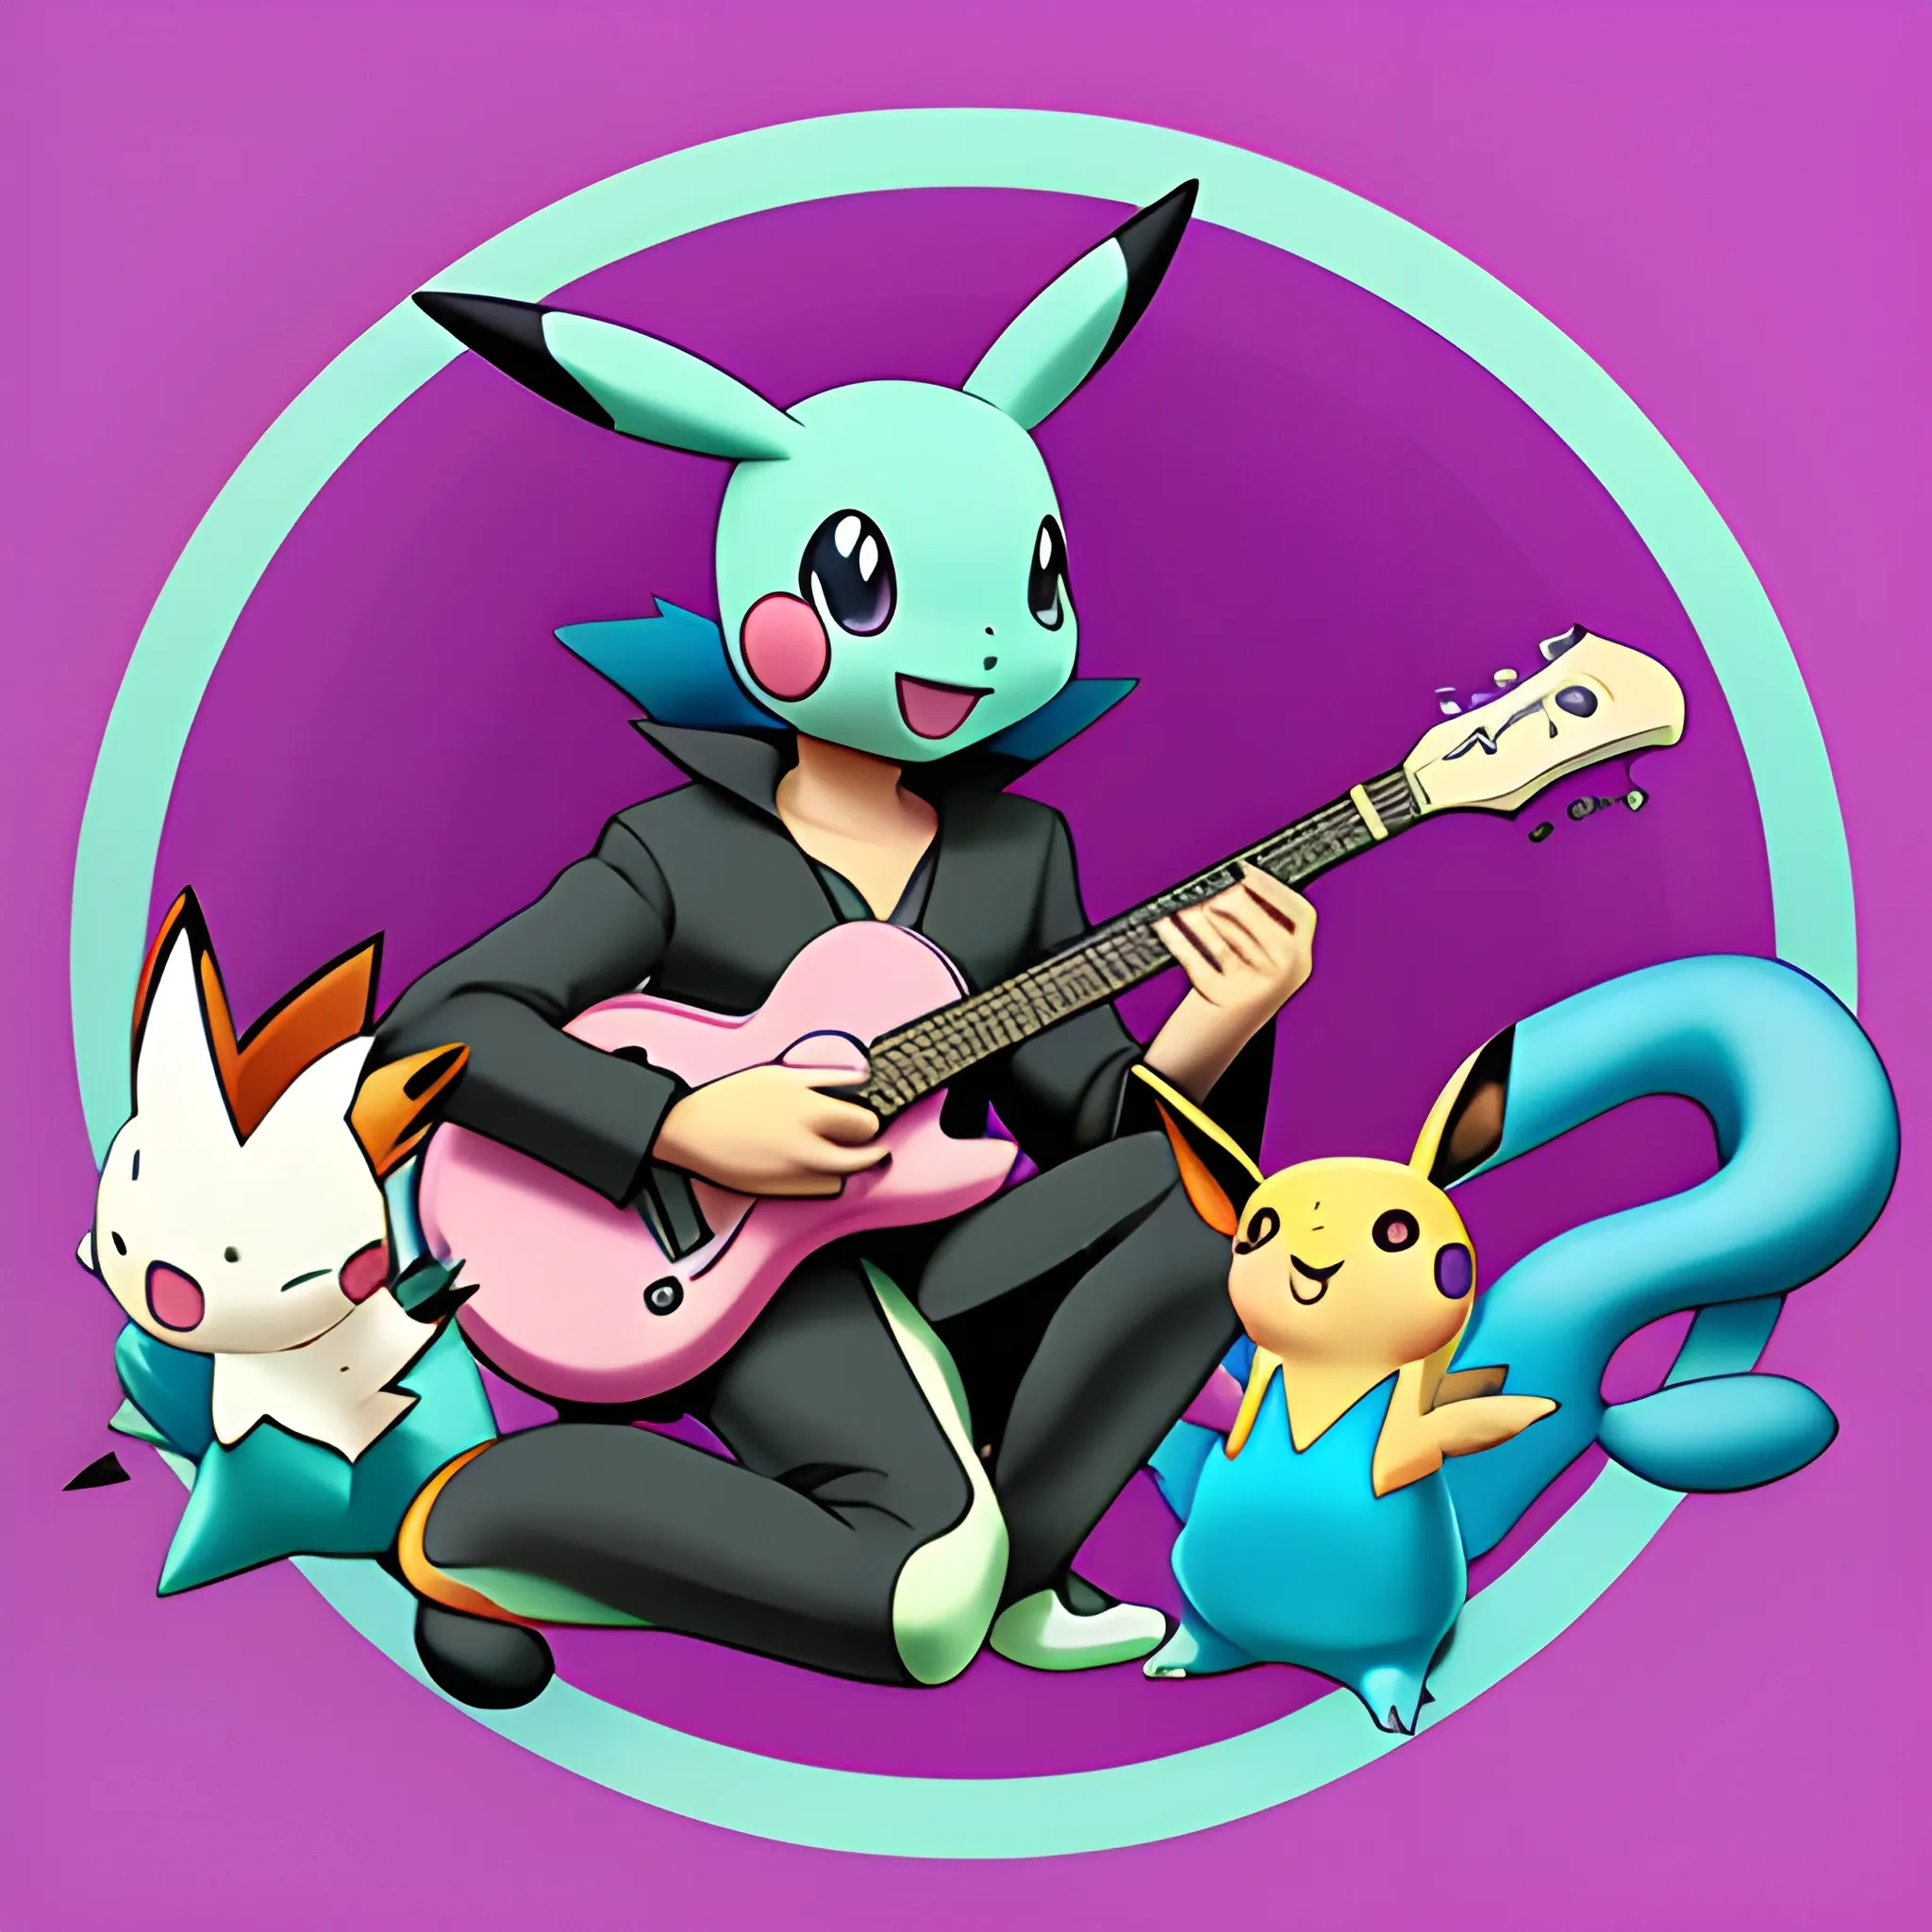 Arca musician in pokemon world